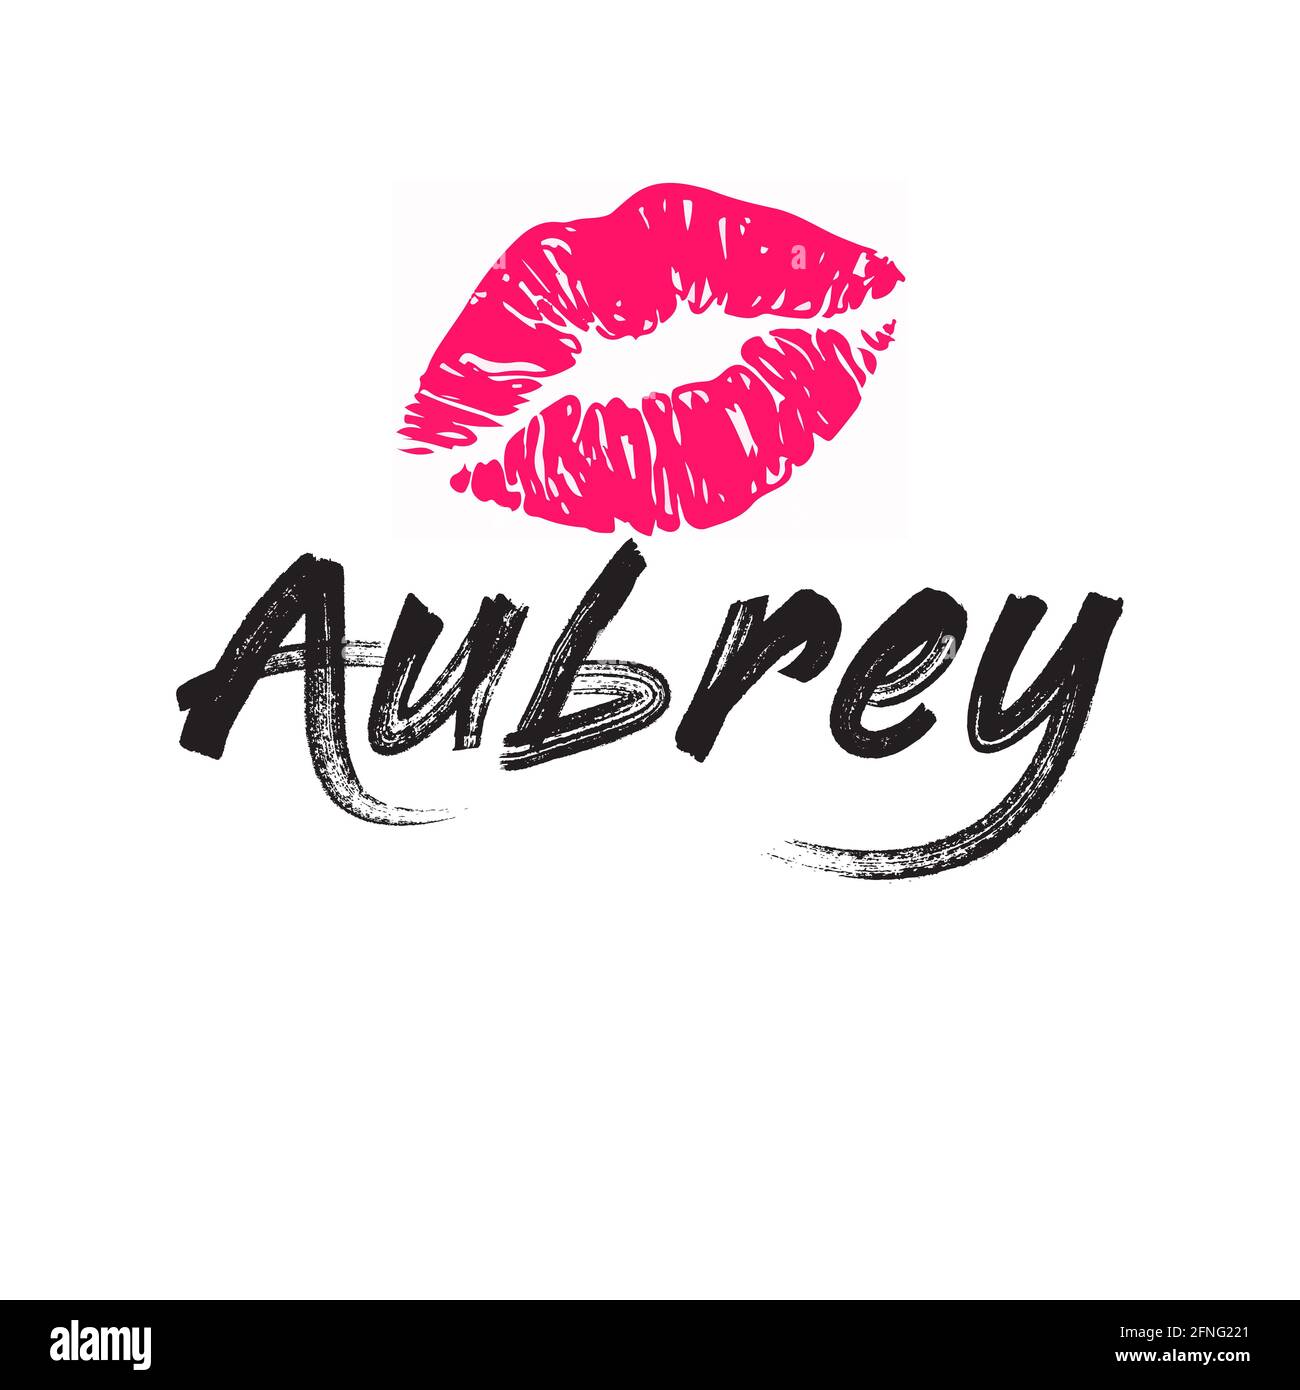 aubrey girl name Stock Photo